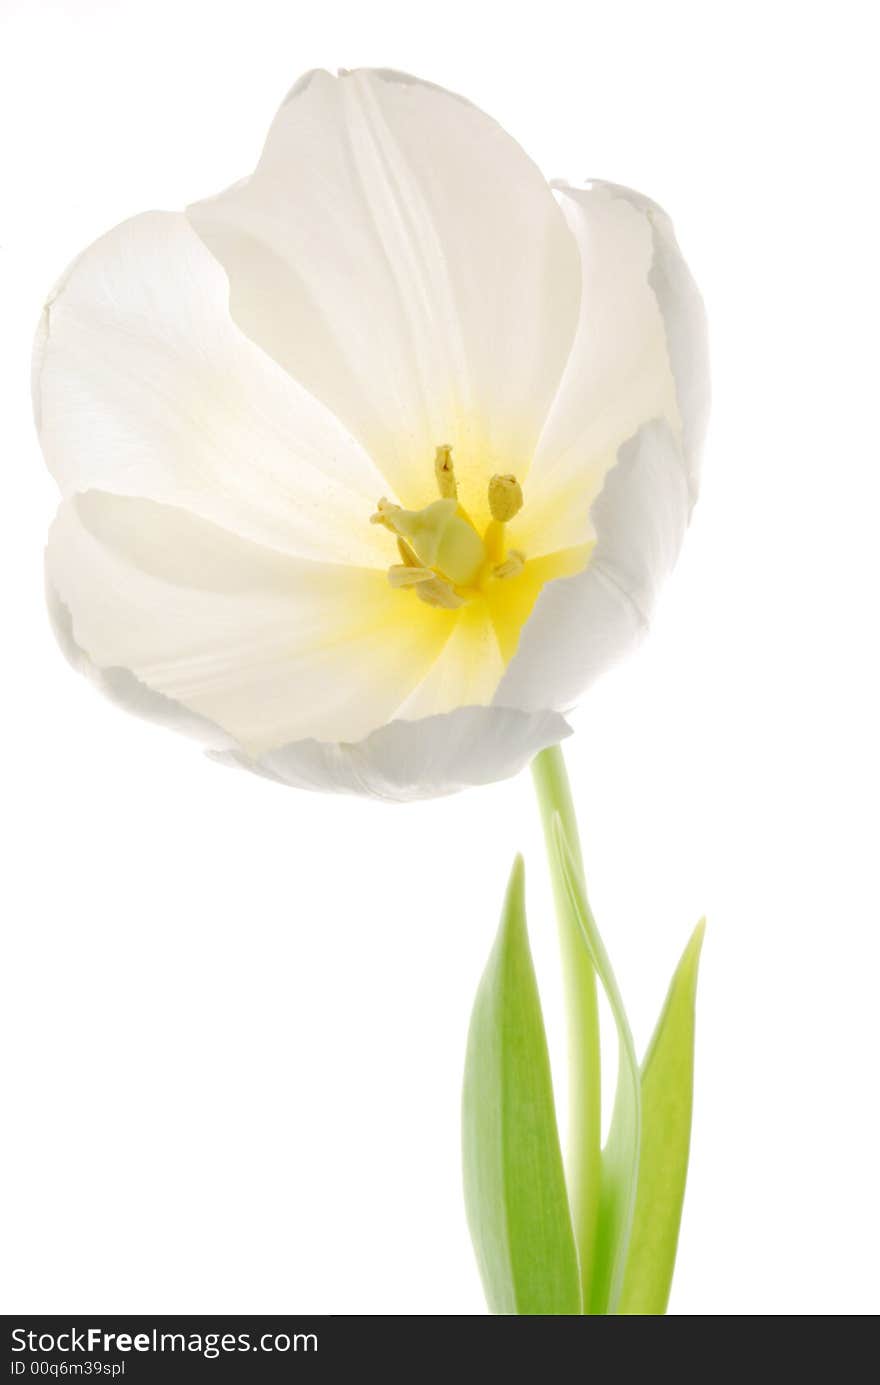 Close up image of white tulip